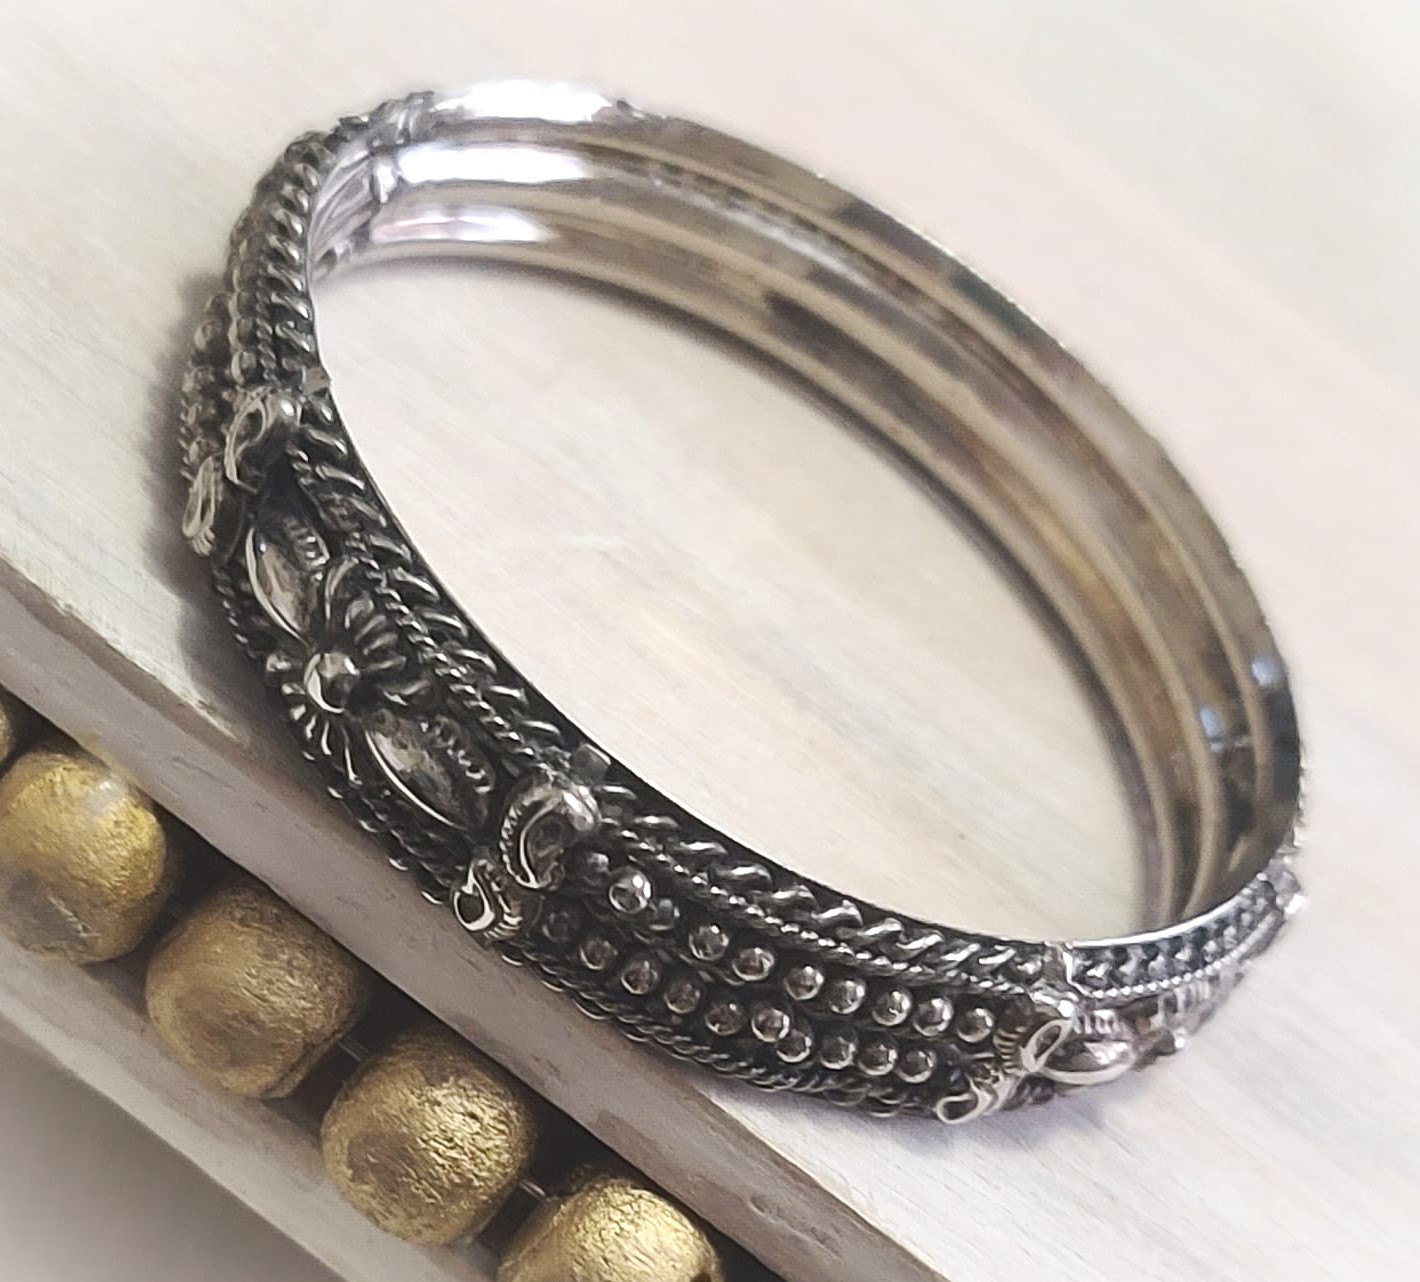 Gothic bracelet, vintage, intracate detailed bangle bracelet